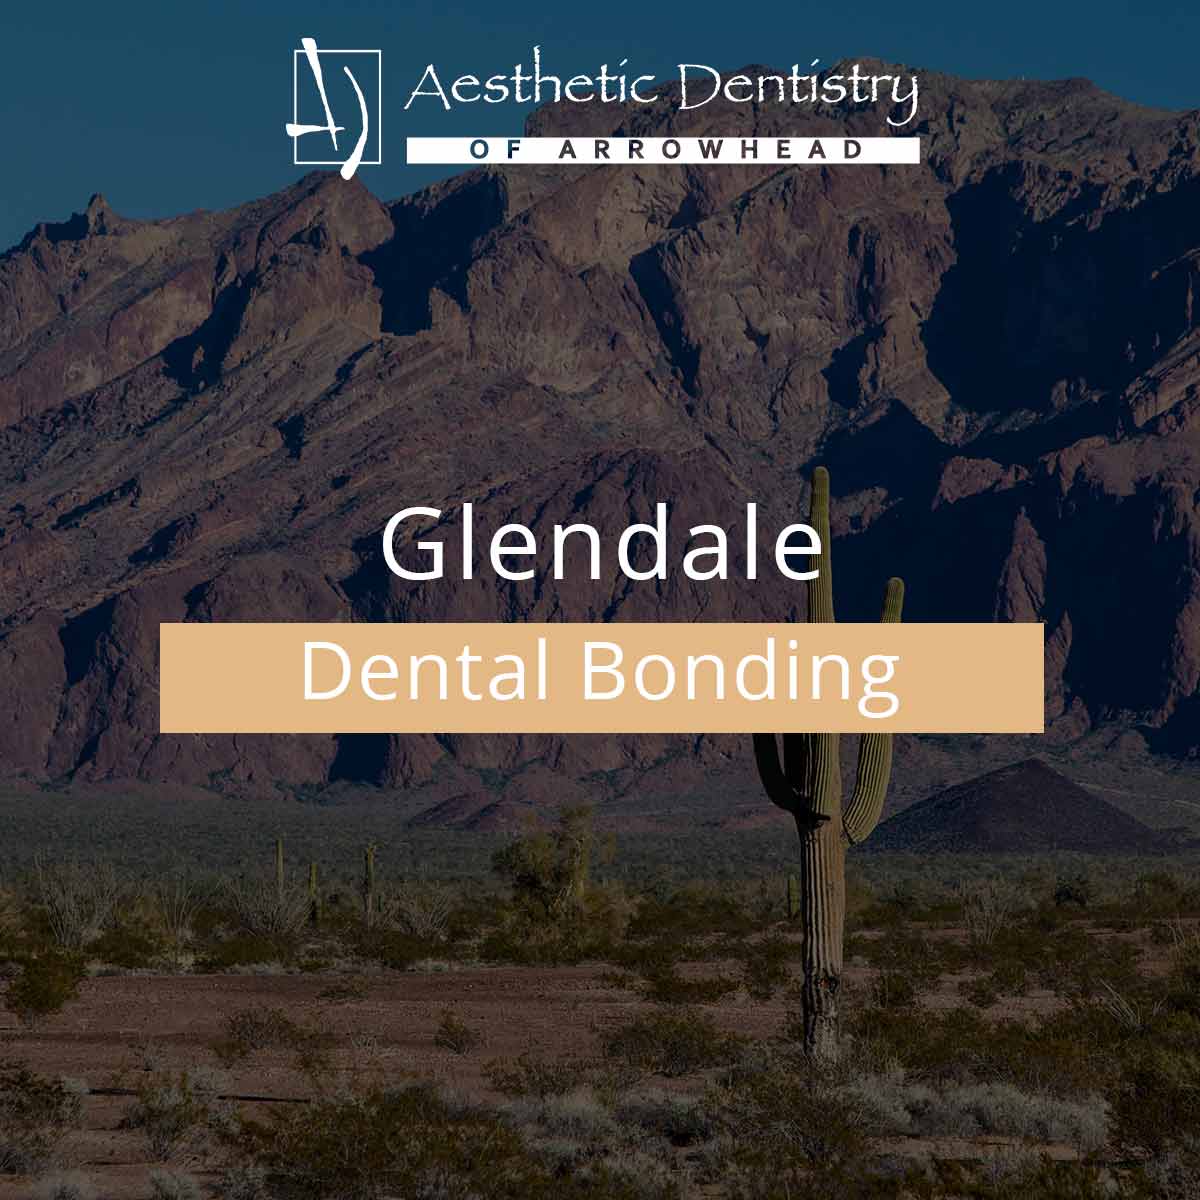 Glendale Dental Bonding featured image